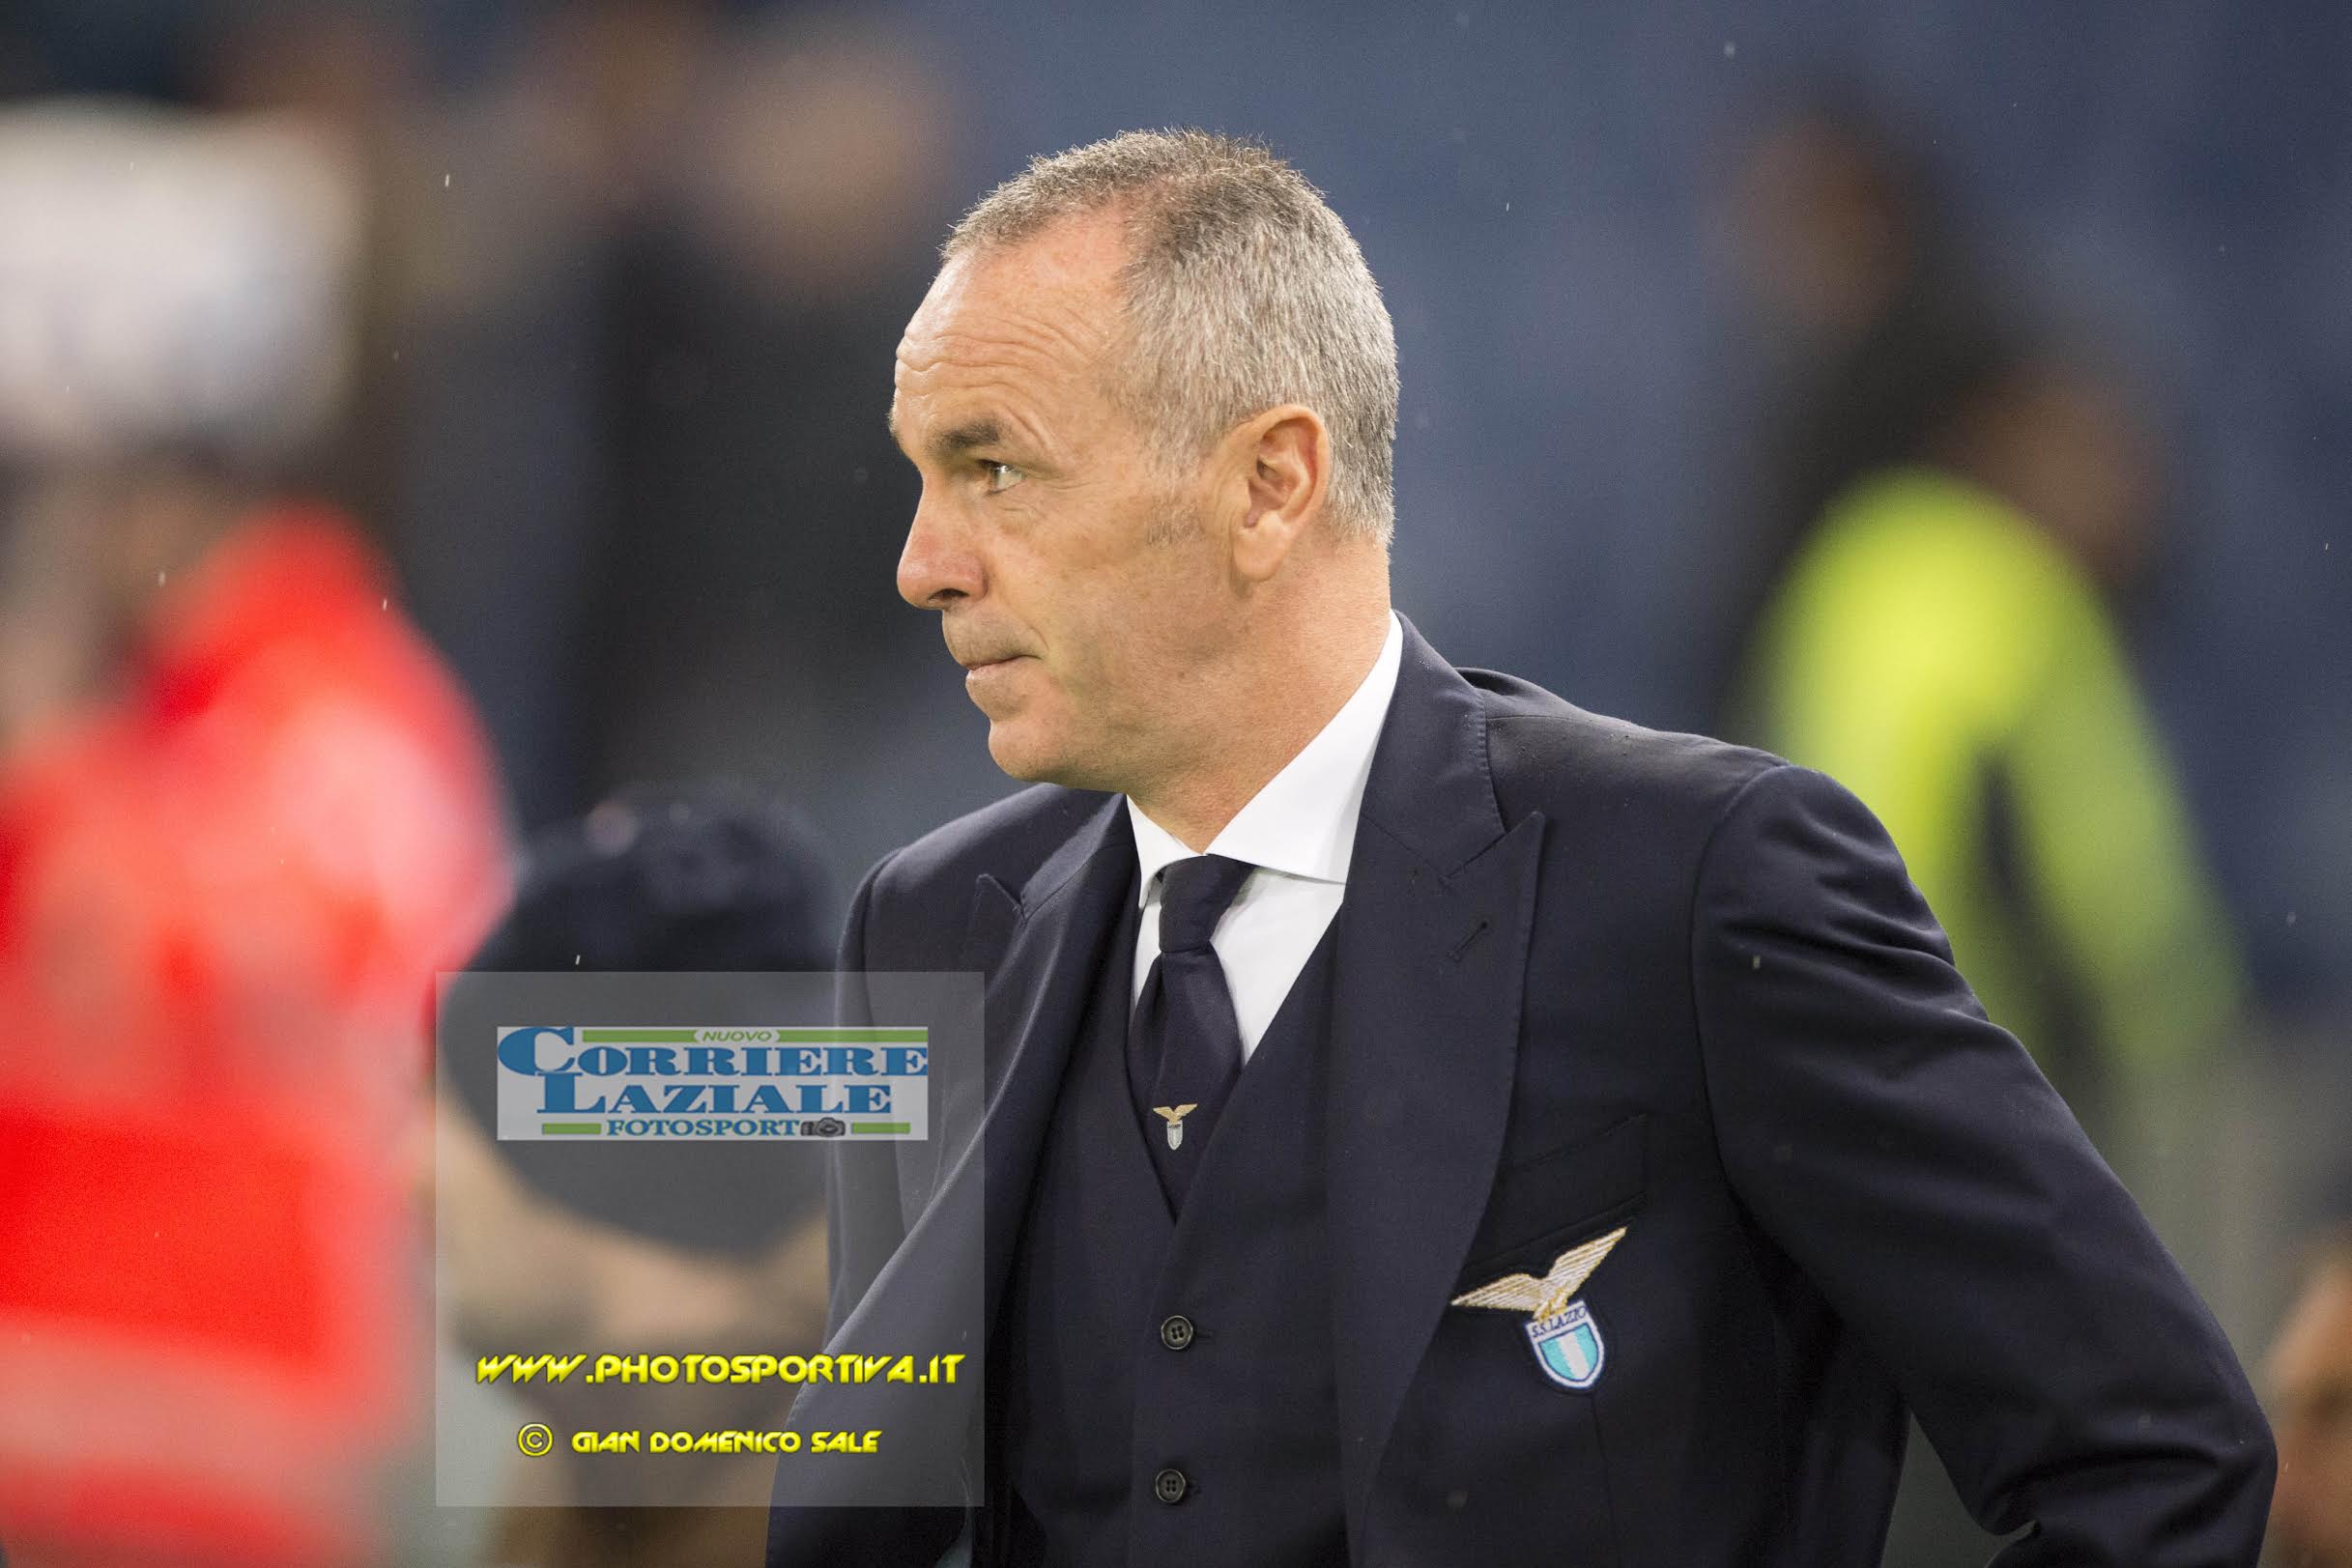 Coppa Italia, Lazio-Juventus 0-1: Lichtsteiner fa proseguire la serie nera contro i bianconeri